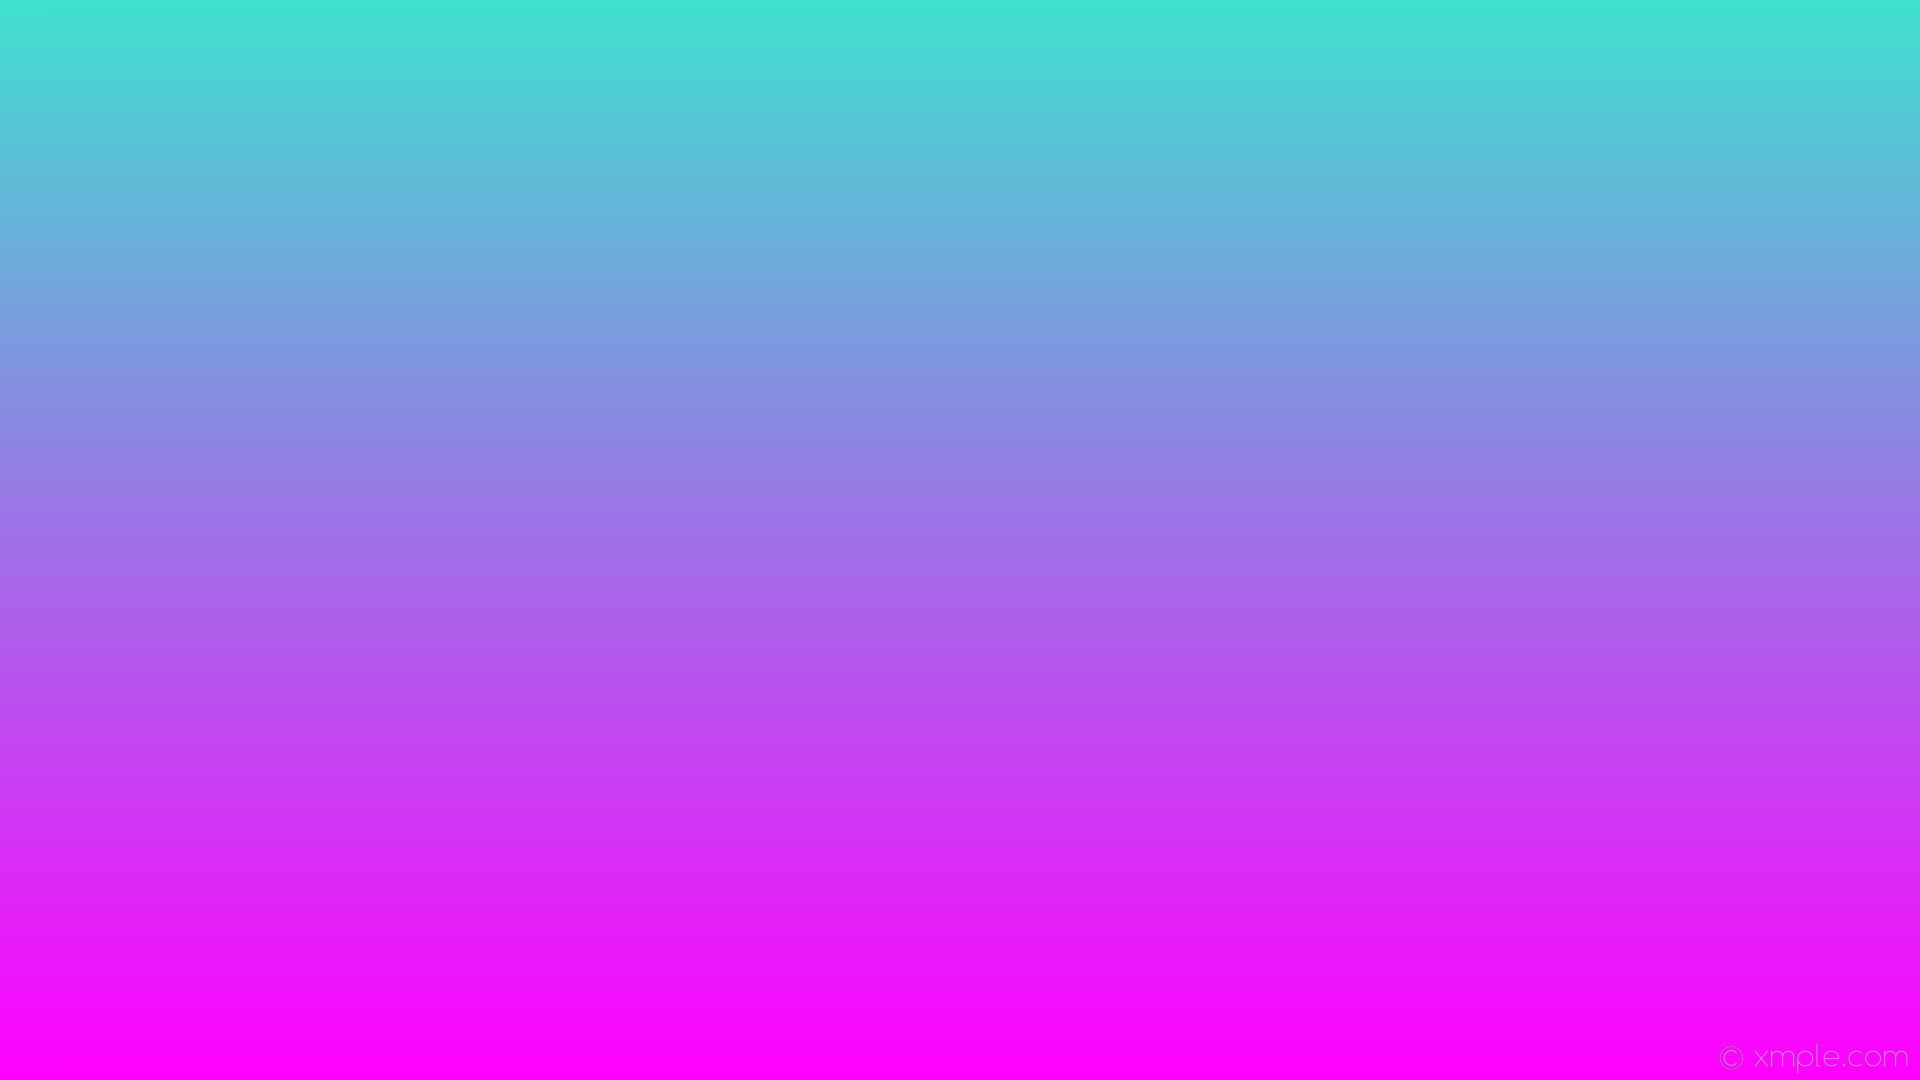 1920x1080 wallpaper linear blue purple gradient turquoise magenta #40e0d0 #ff00ff 90Â°